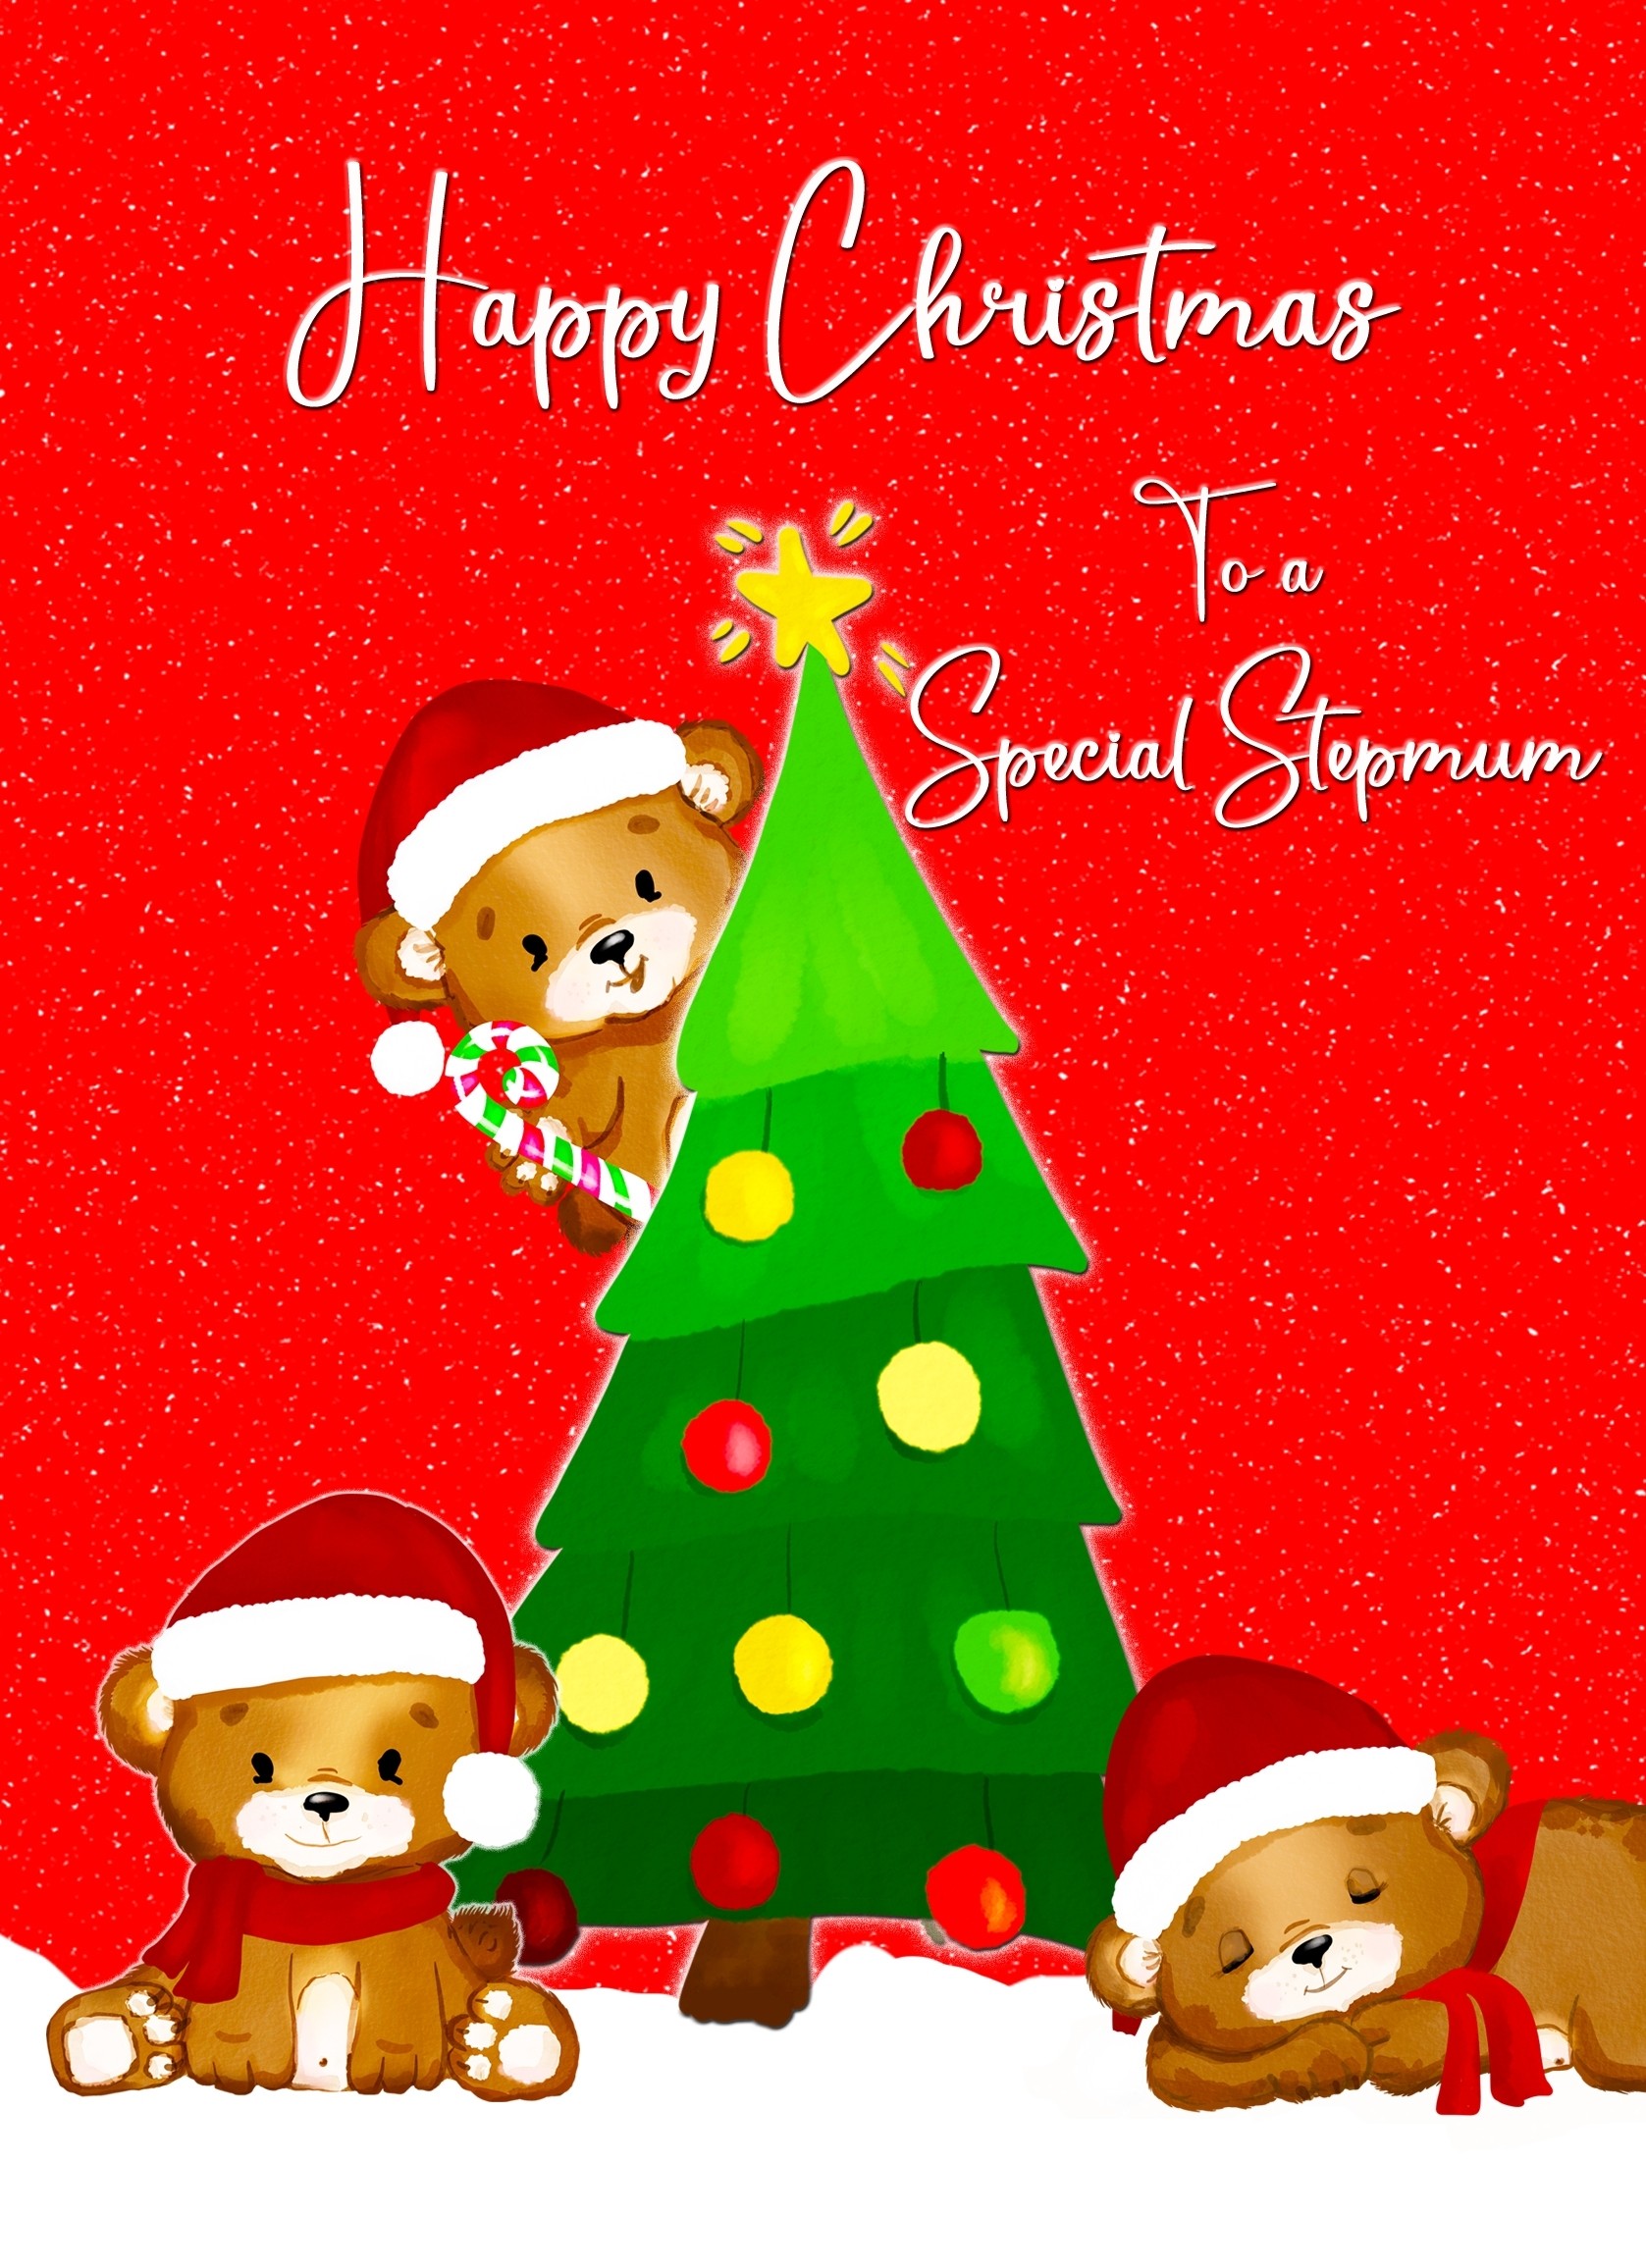 Christmas Card For Stepmum (Red Christmas Tree)